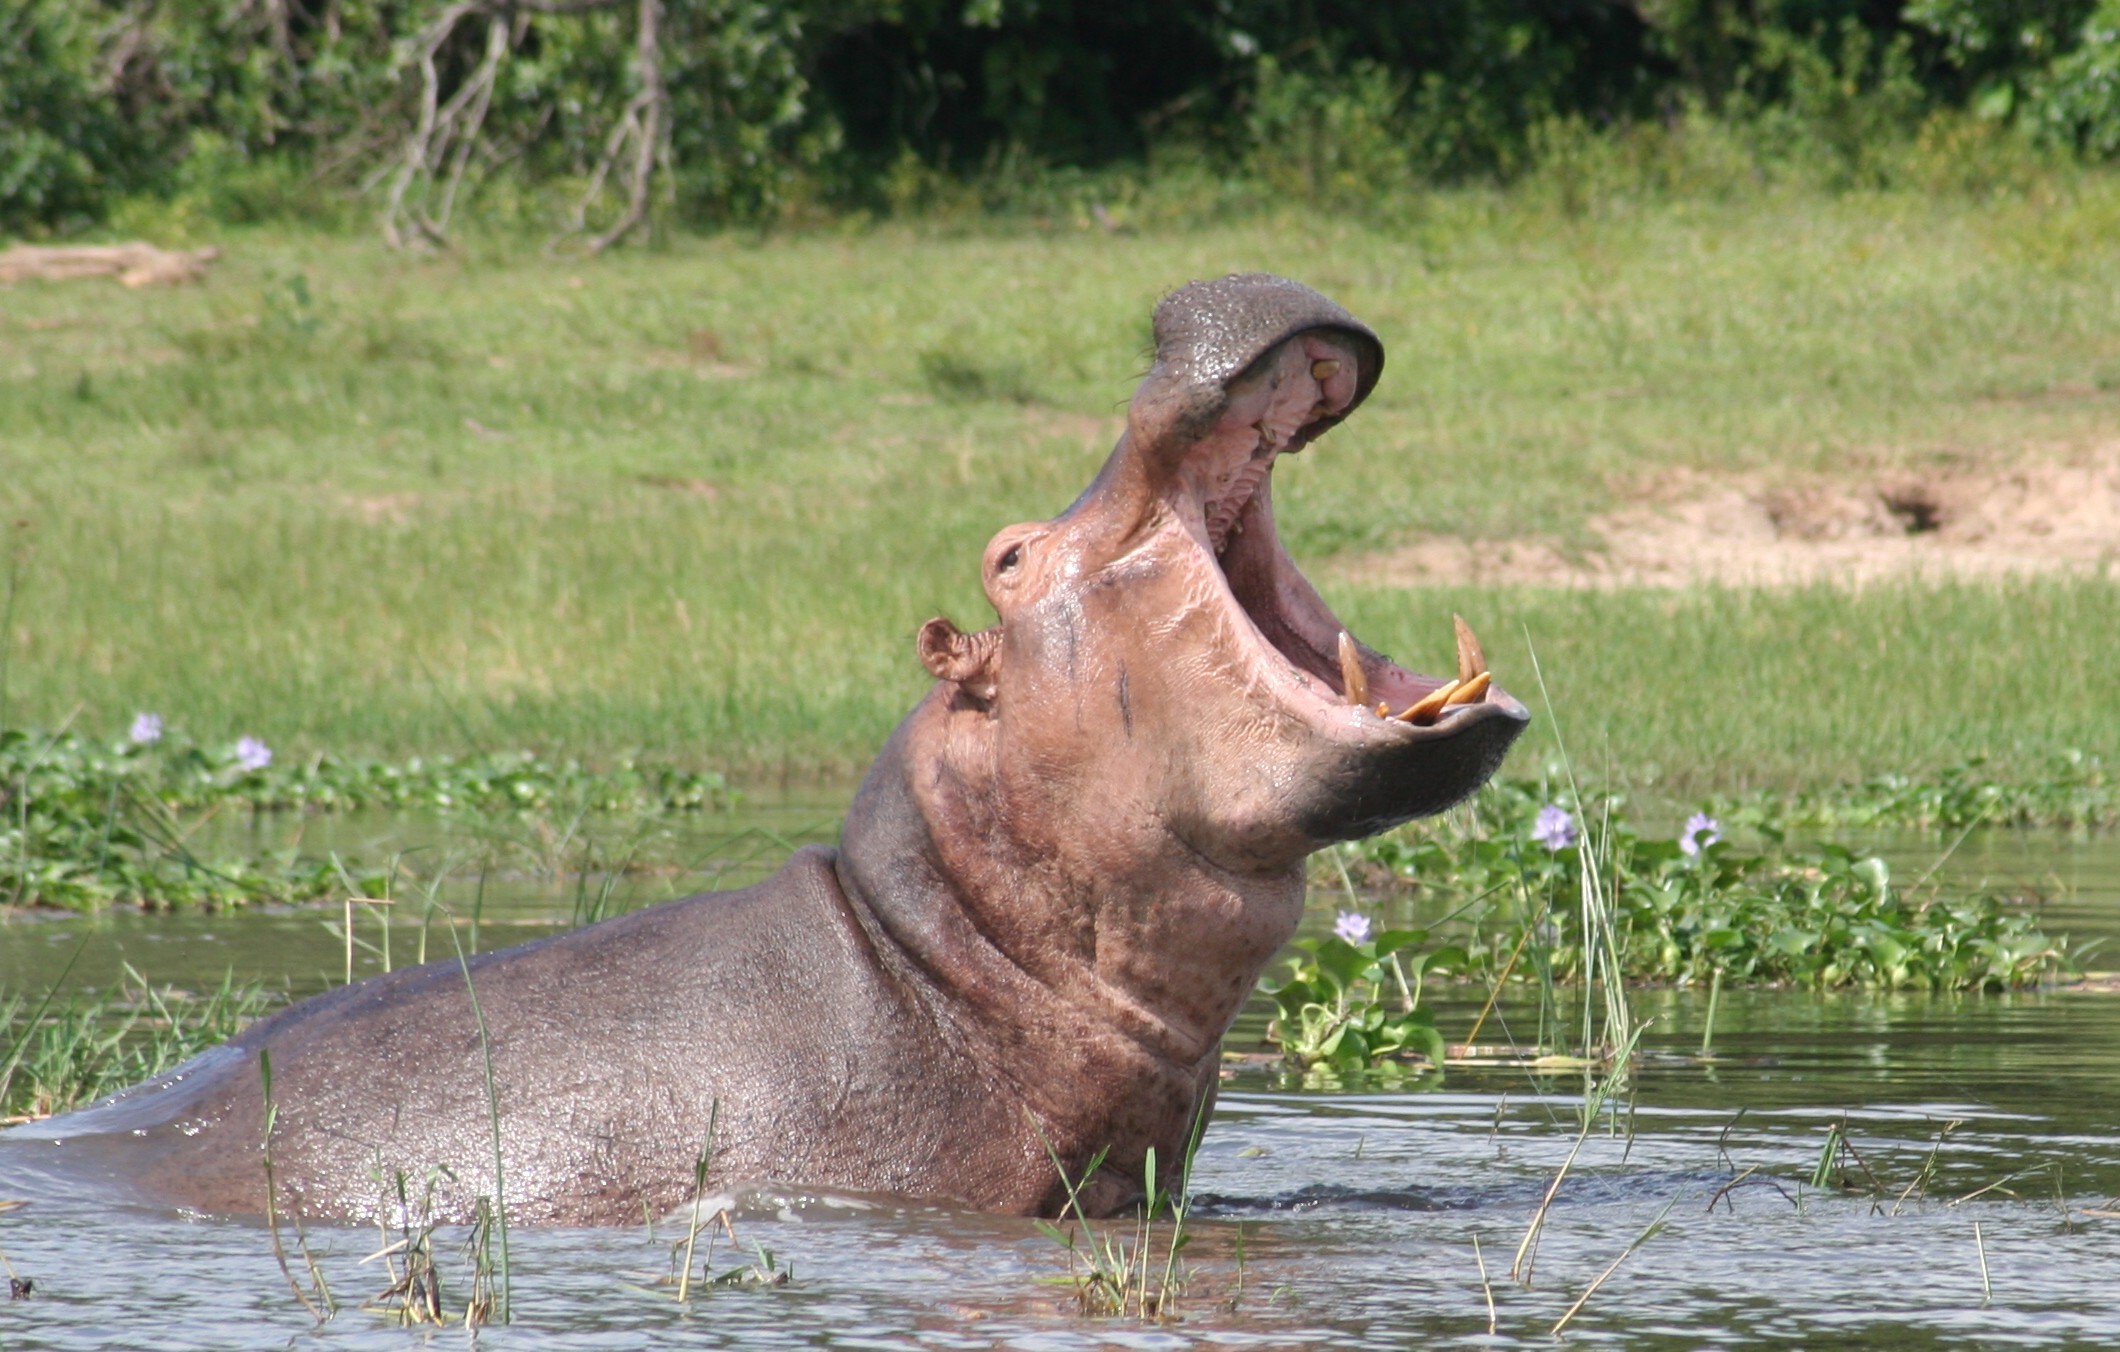 Hippos are very big animals